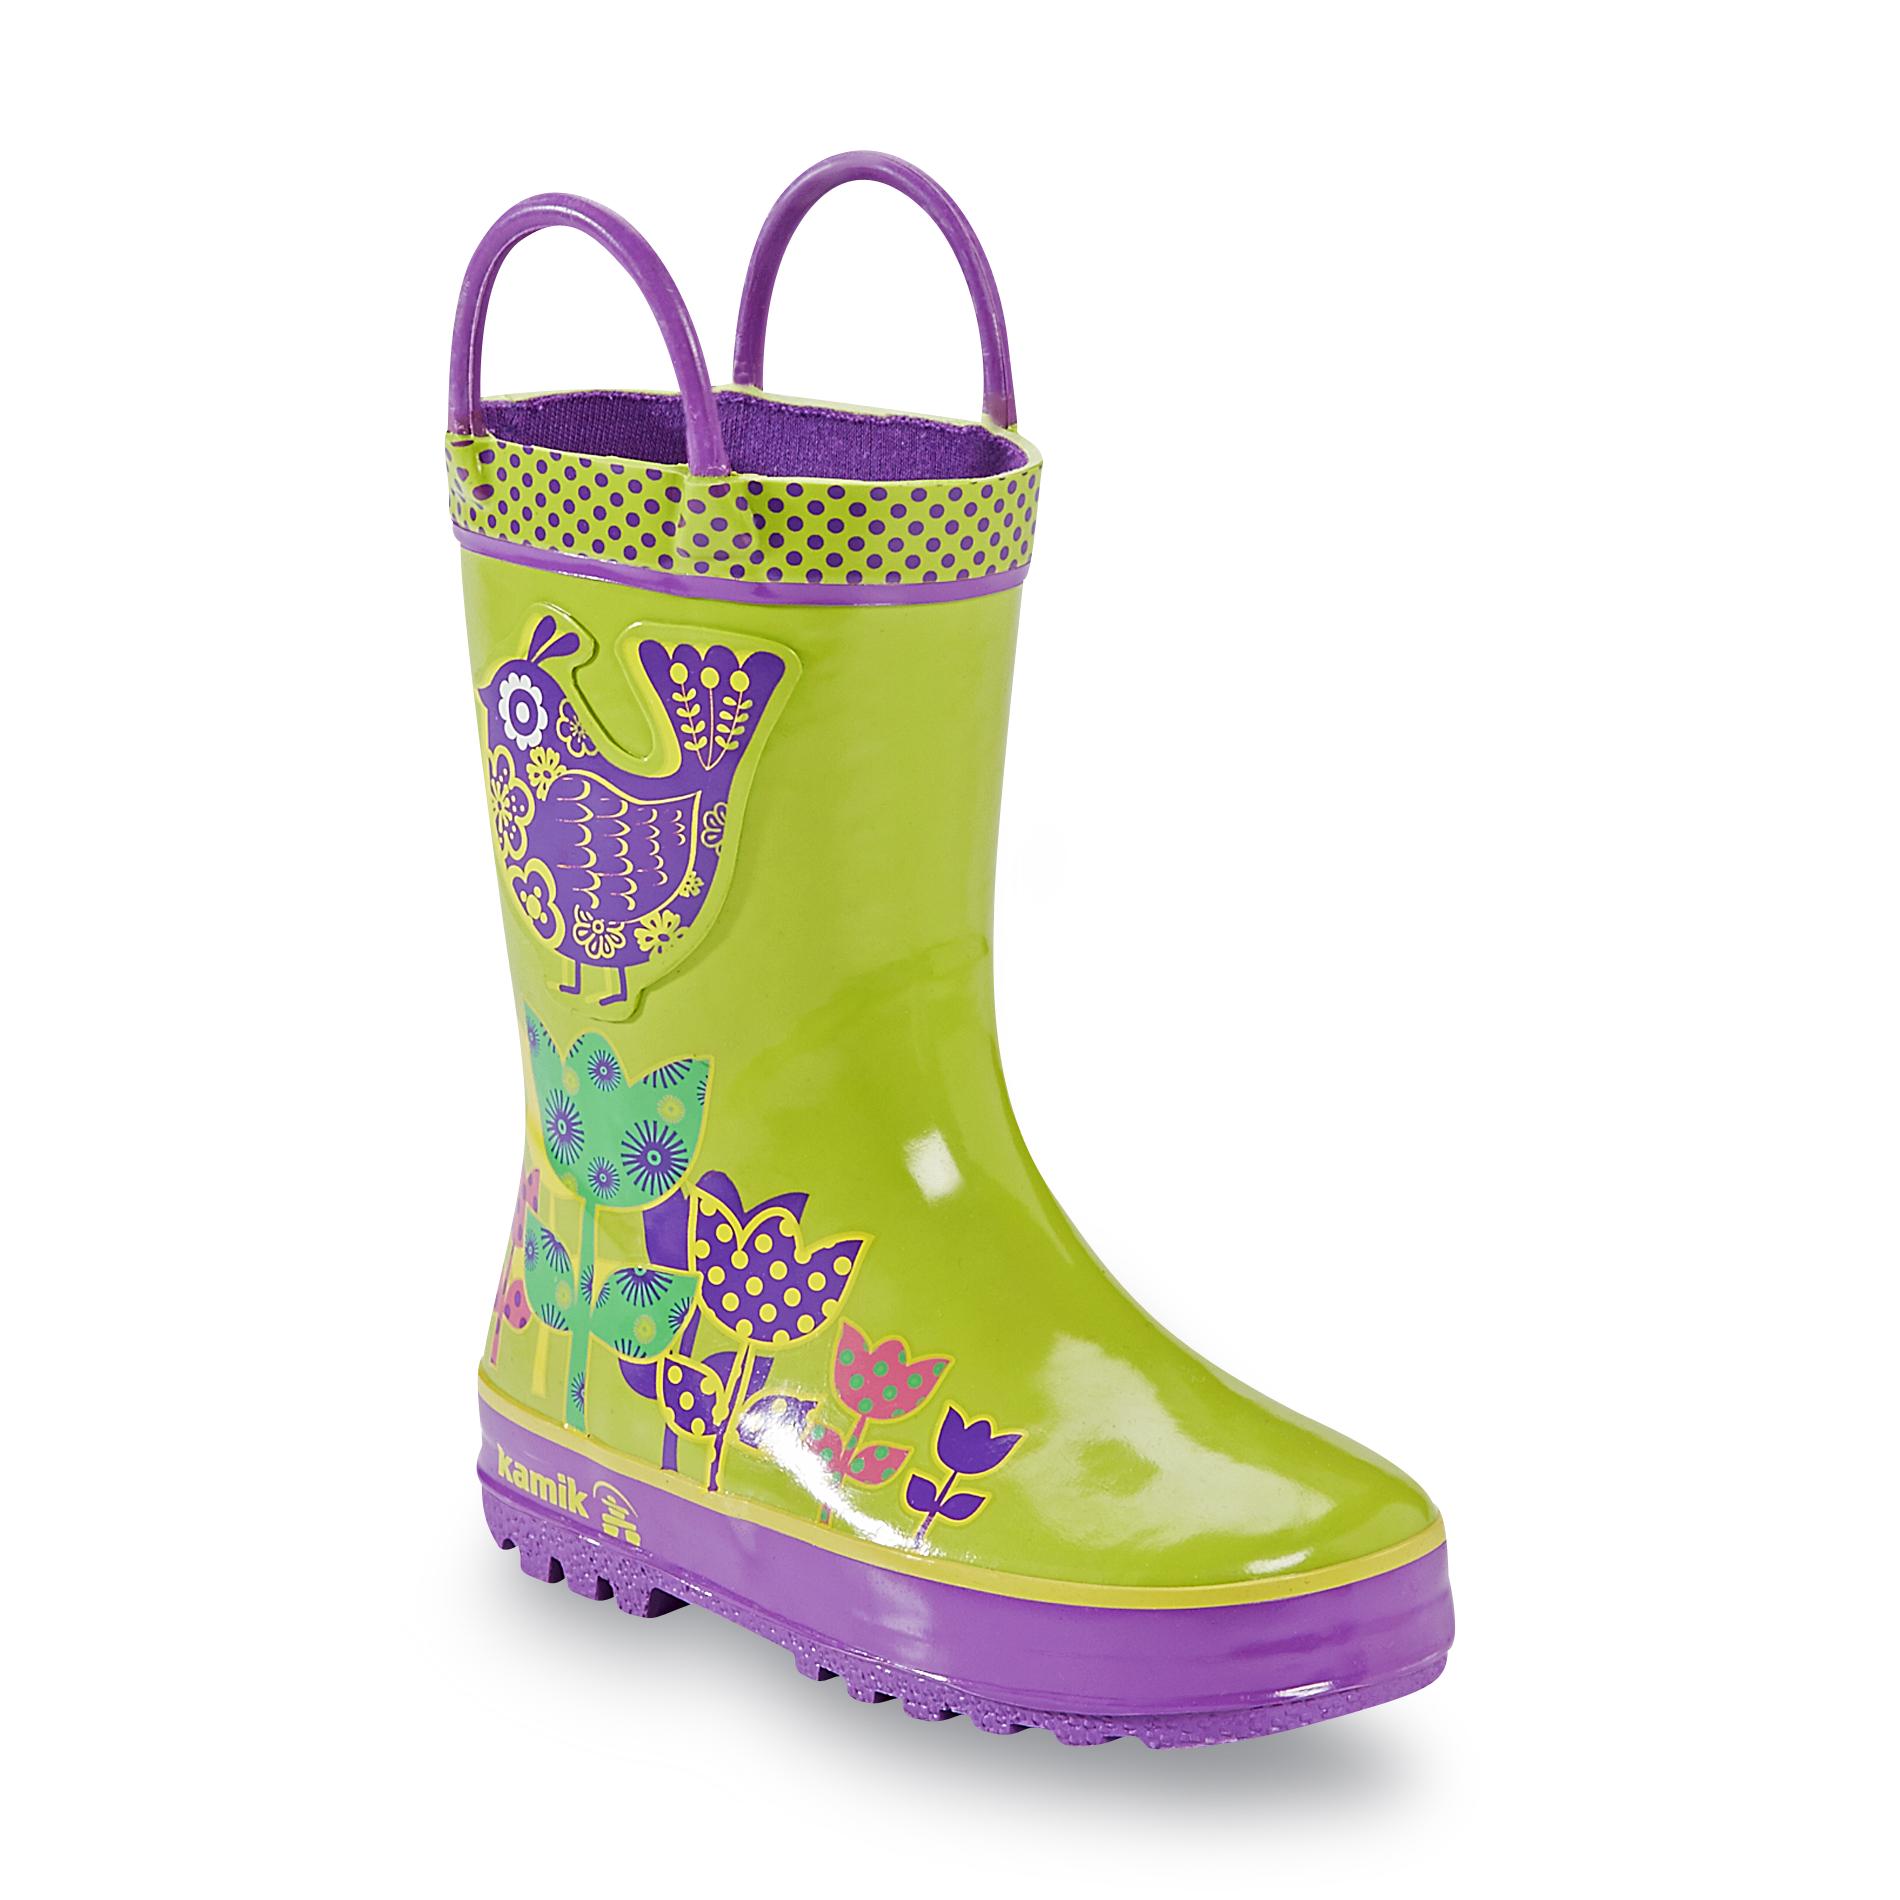 Kamik Toddler/Girl's 7" Green/Purple Rubber Rain Boot - Bird & Flowers